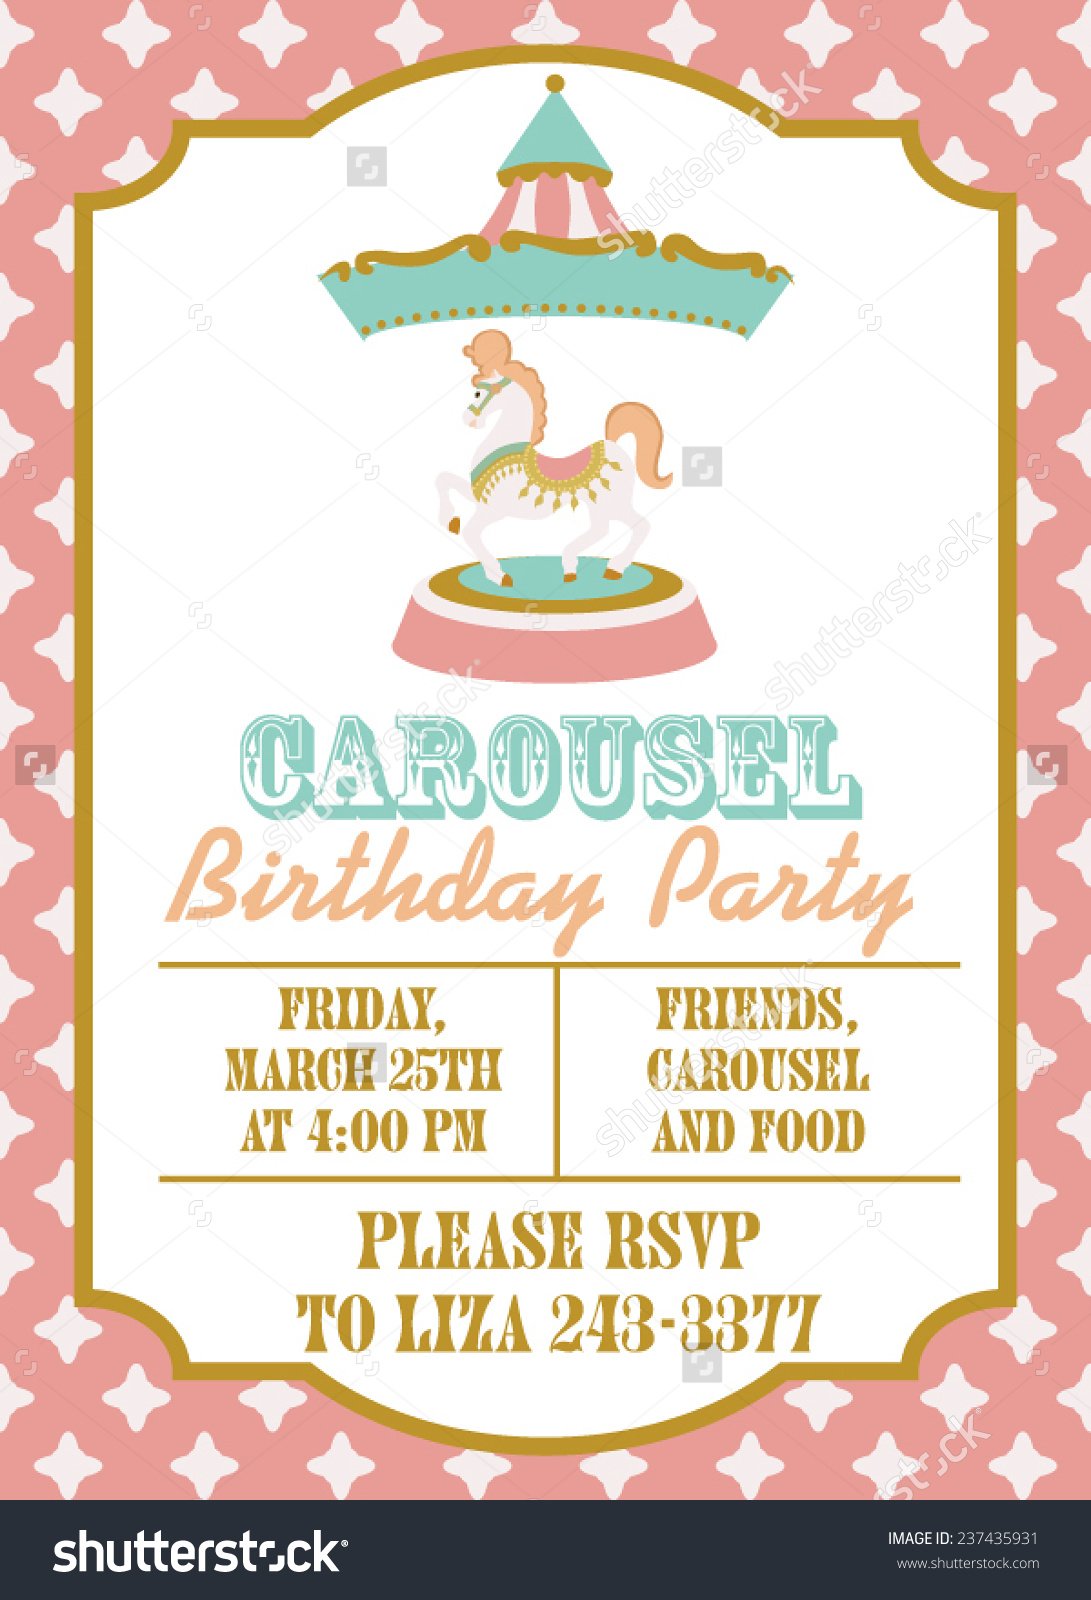 Carousel Birthday Party Stock Vector 237435931